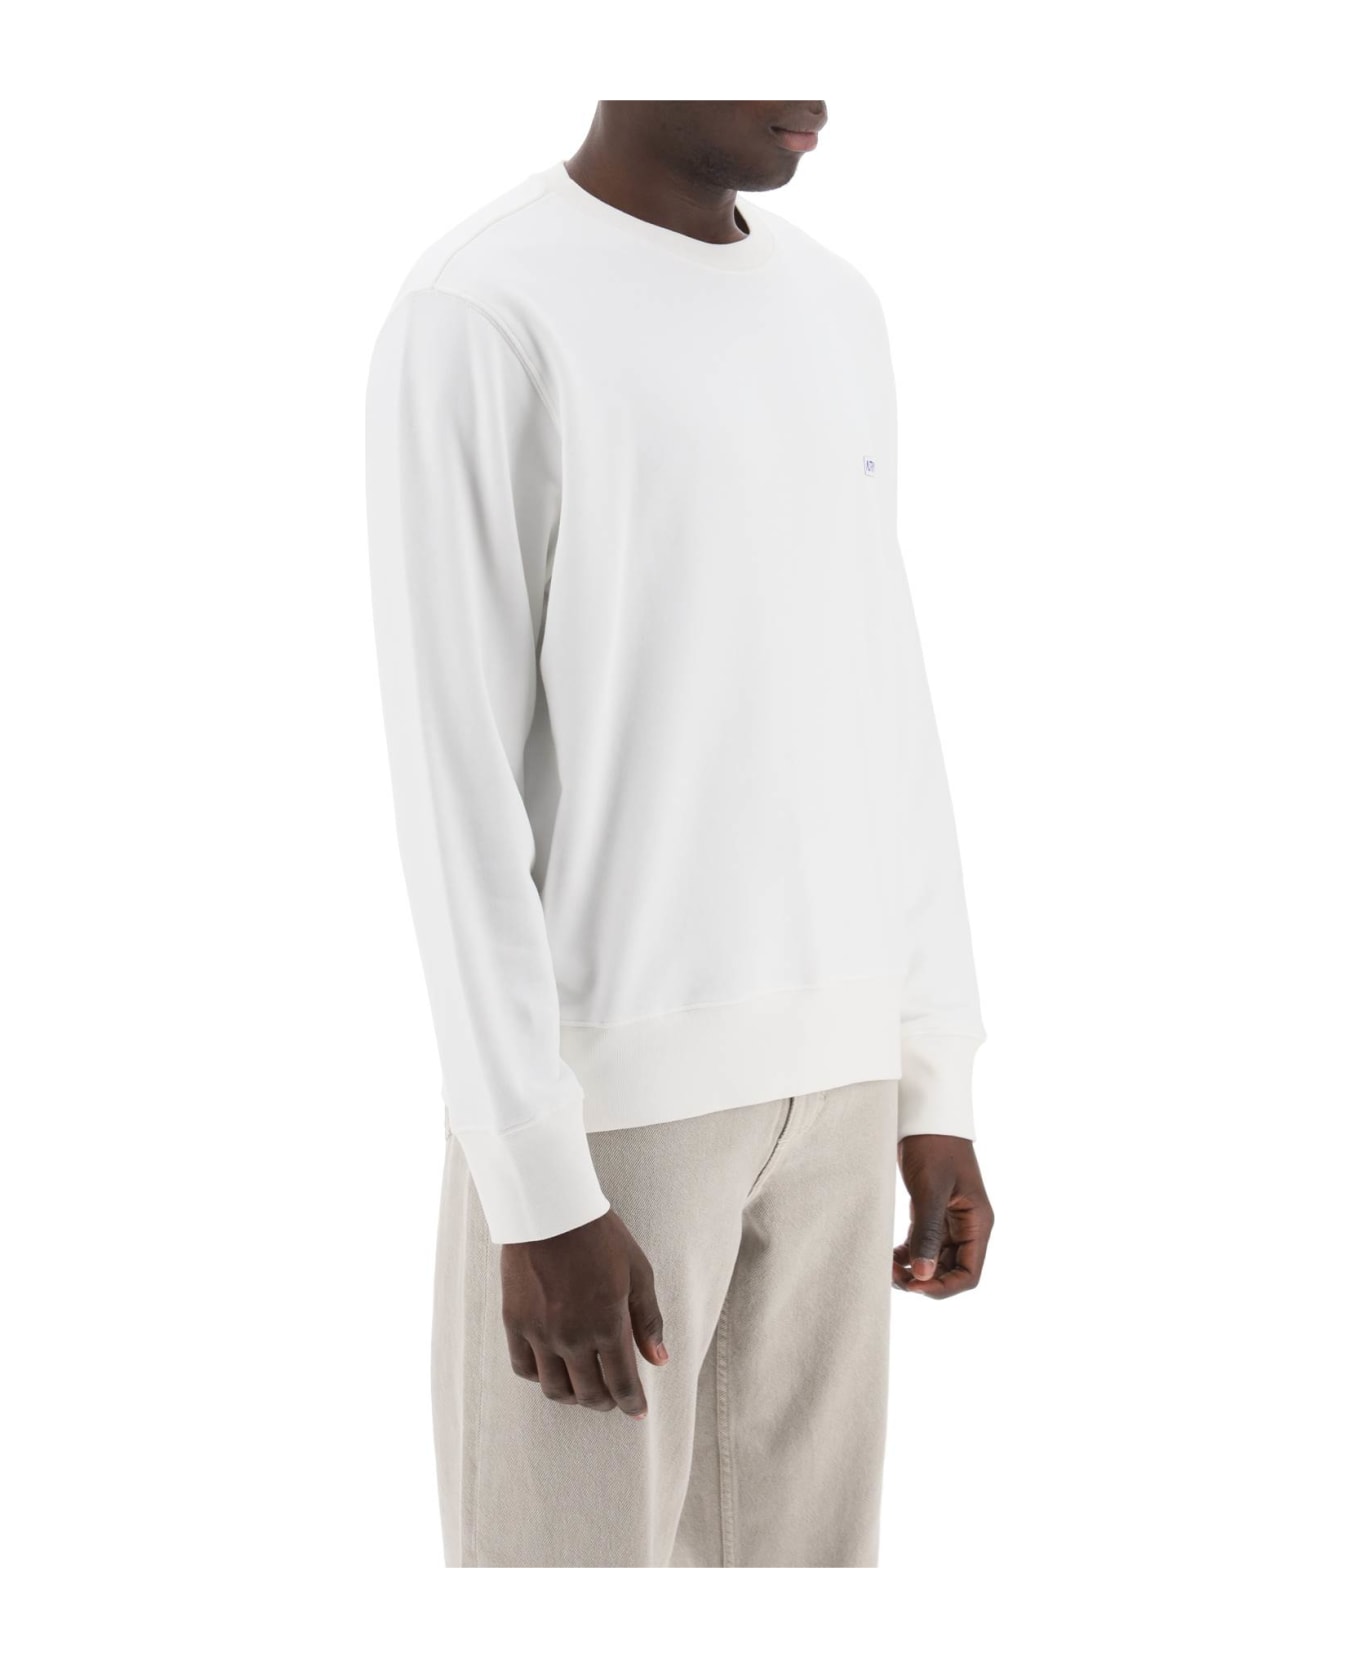 Autry Cotton Sweatshirt With Logo - White